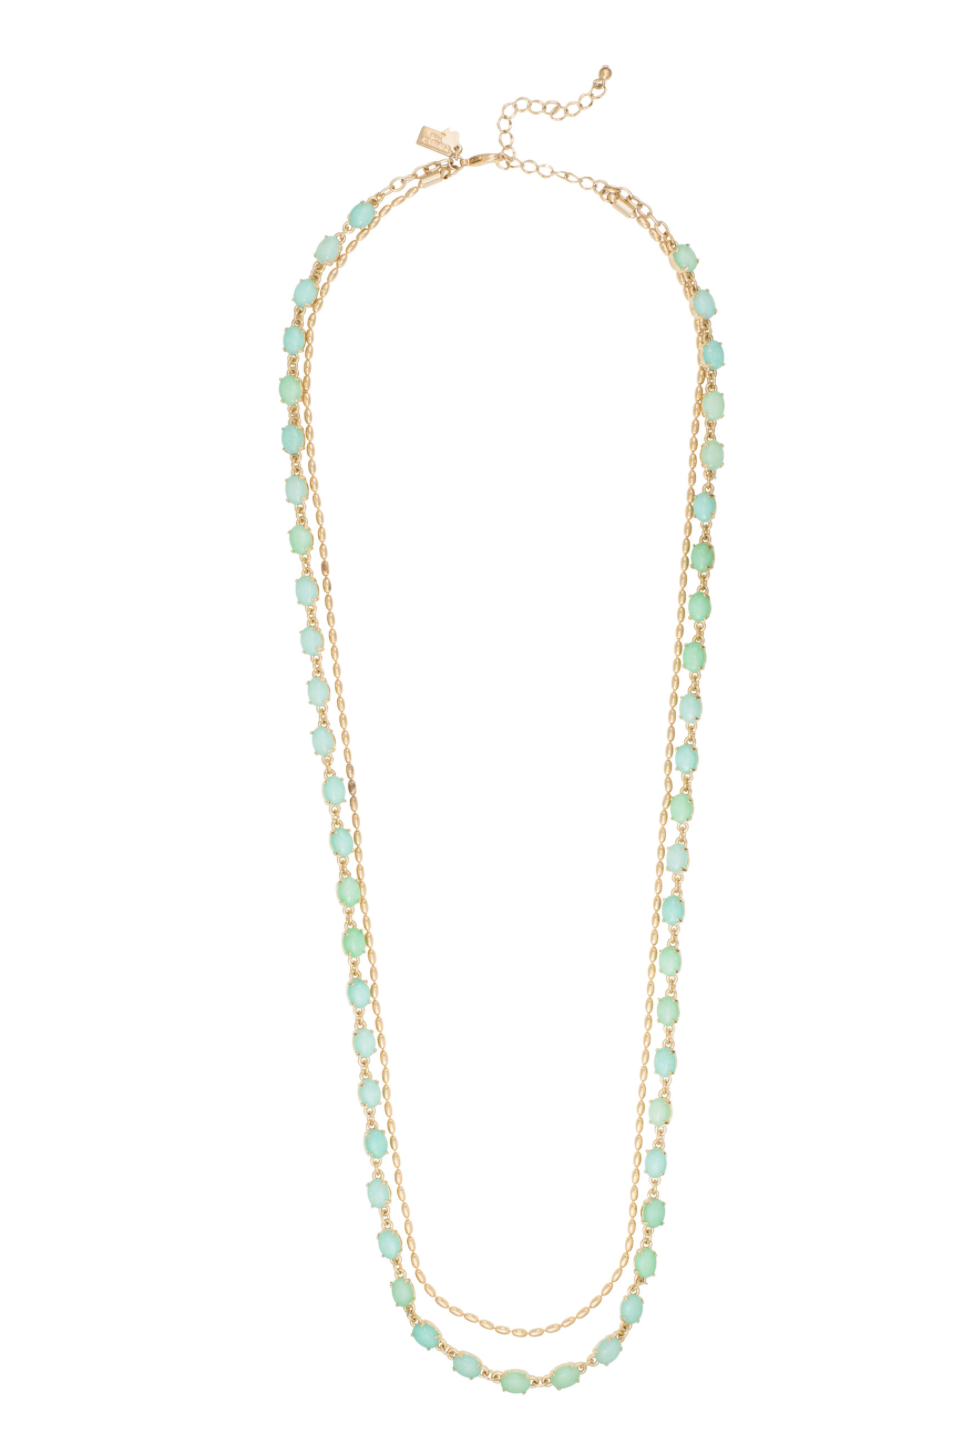 Kate Spade Mint Seastone Layered Necklace - Bijoux Closet